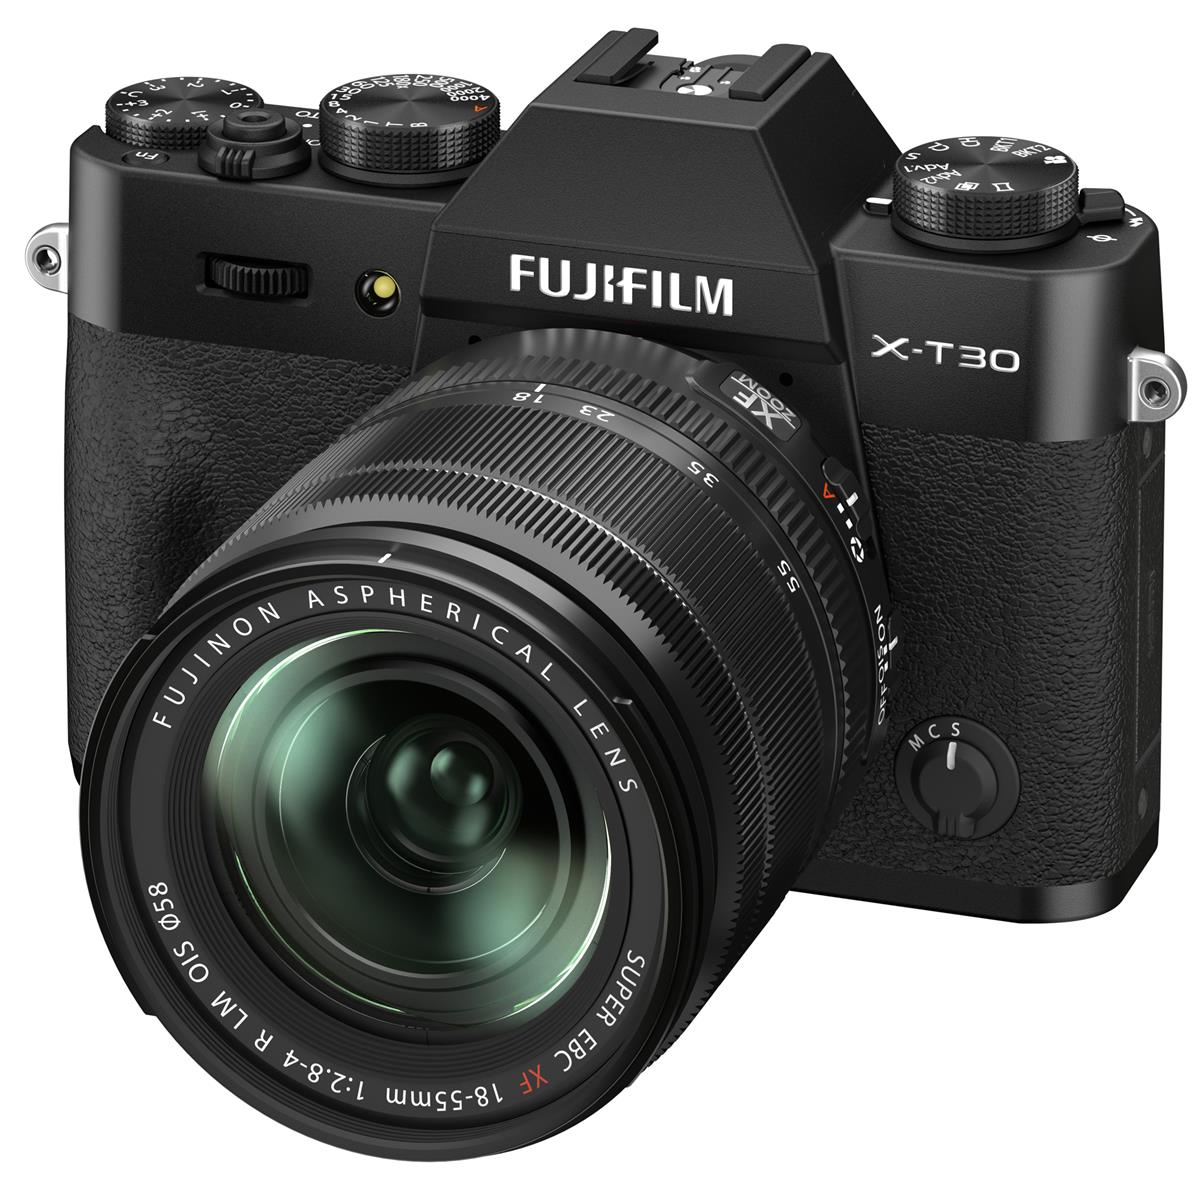 Fujifilm X-T30 II Mirrorless Camera Body with XF 18-55mm Lens Kit (Black)